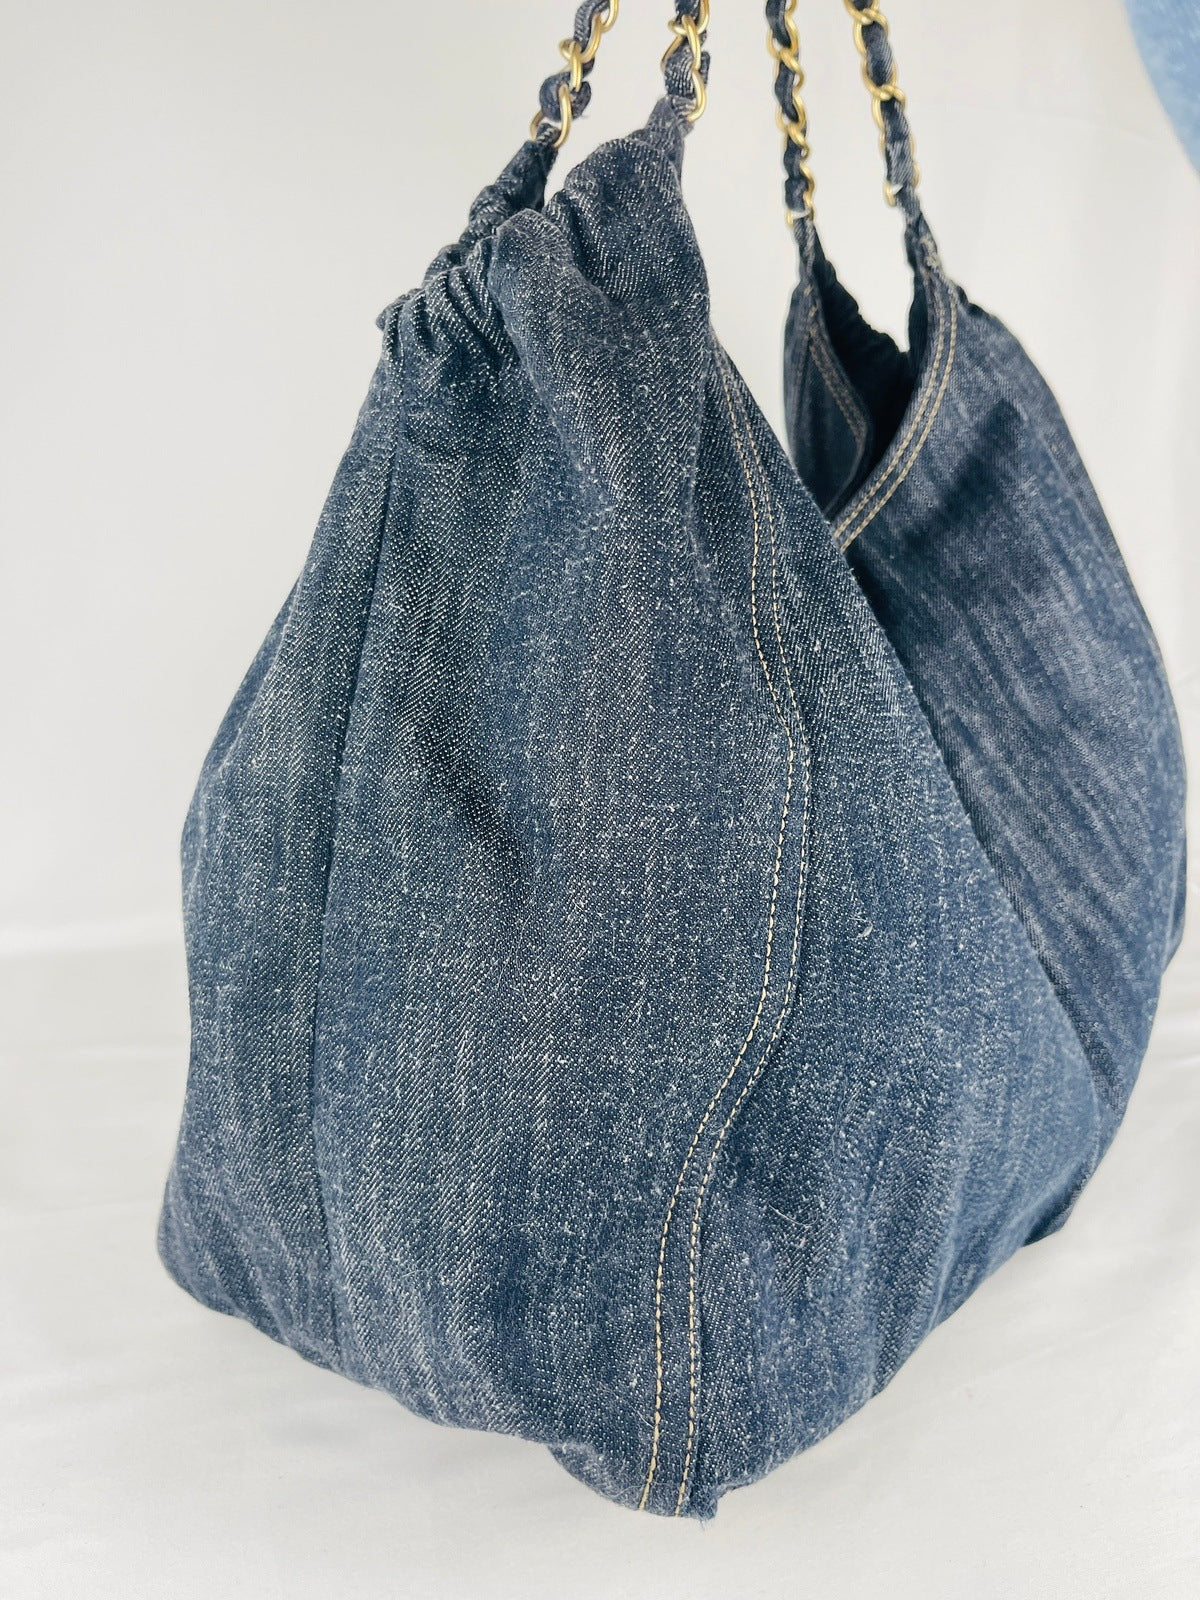 Authentic Chanel Coco Cabas Large Hobo Bag I Blue Jeans Denim I Excellent